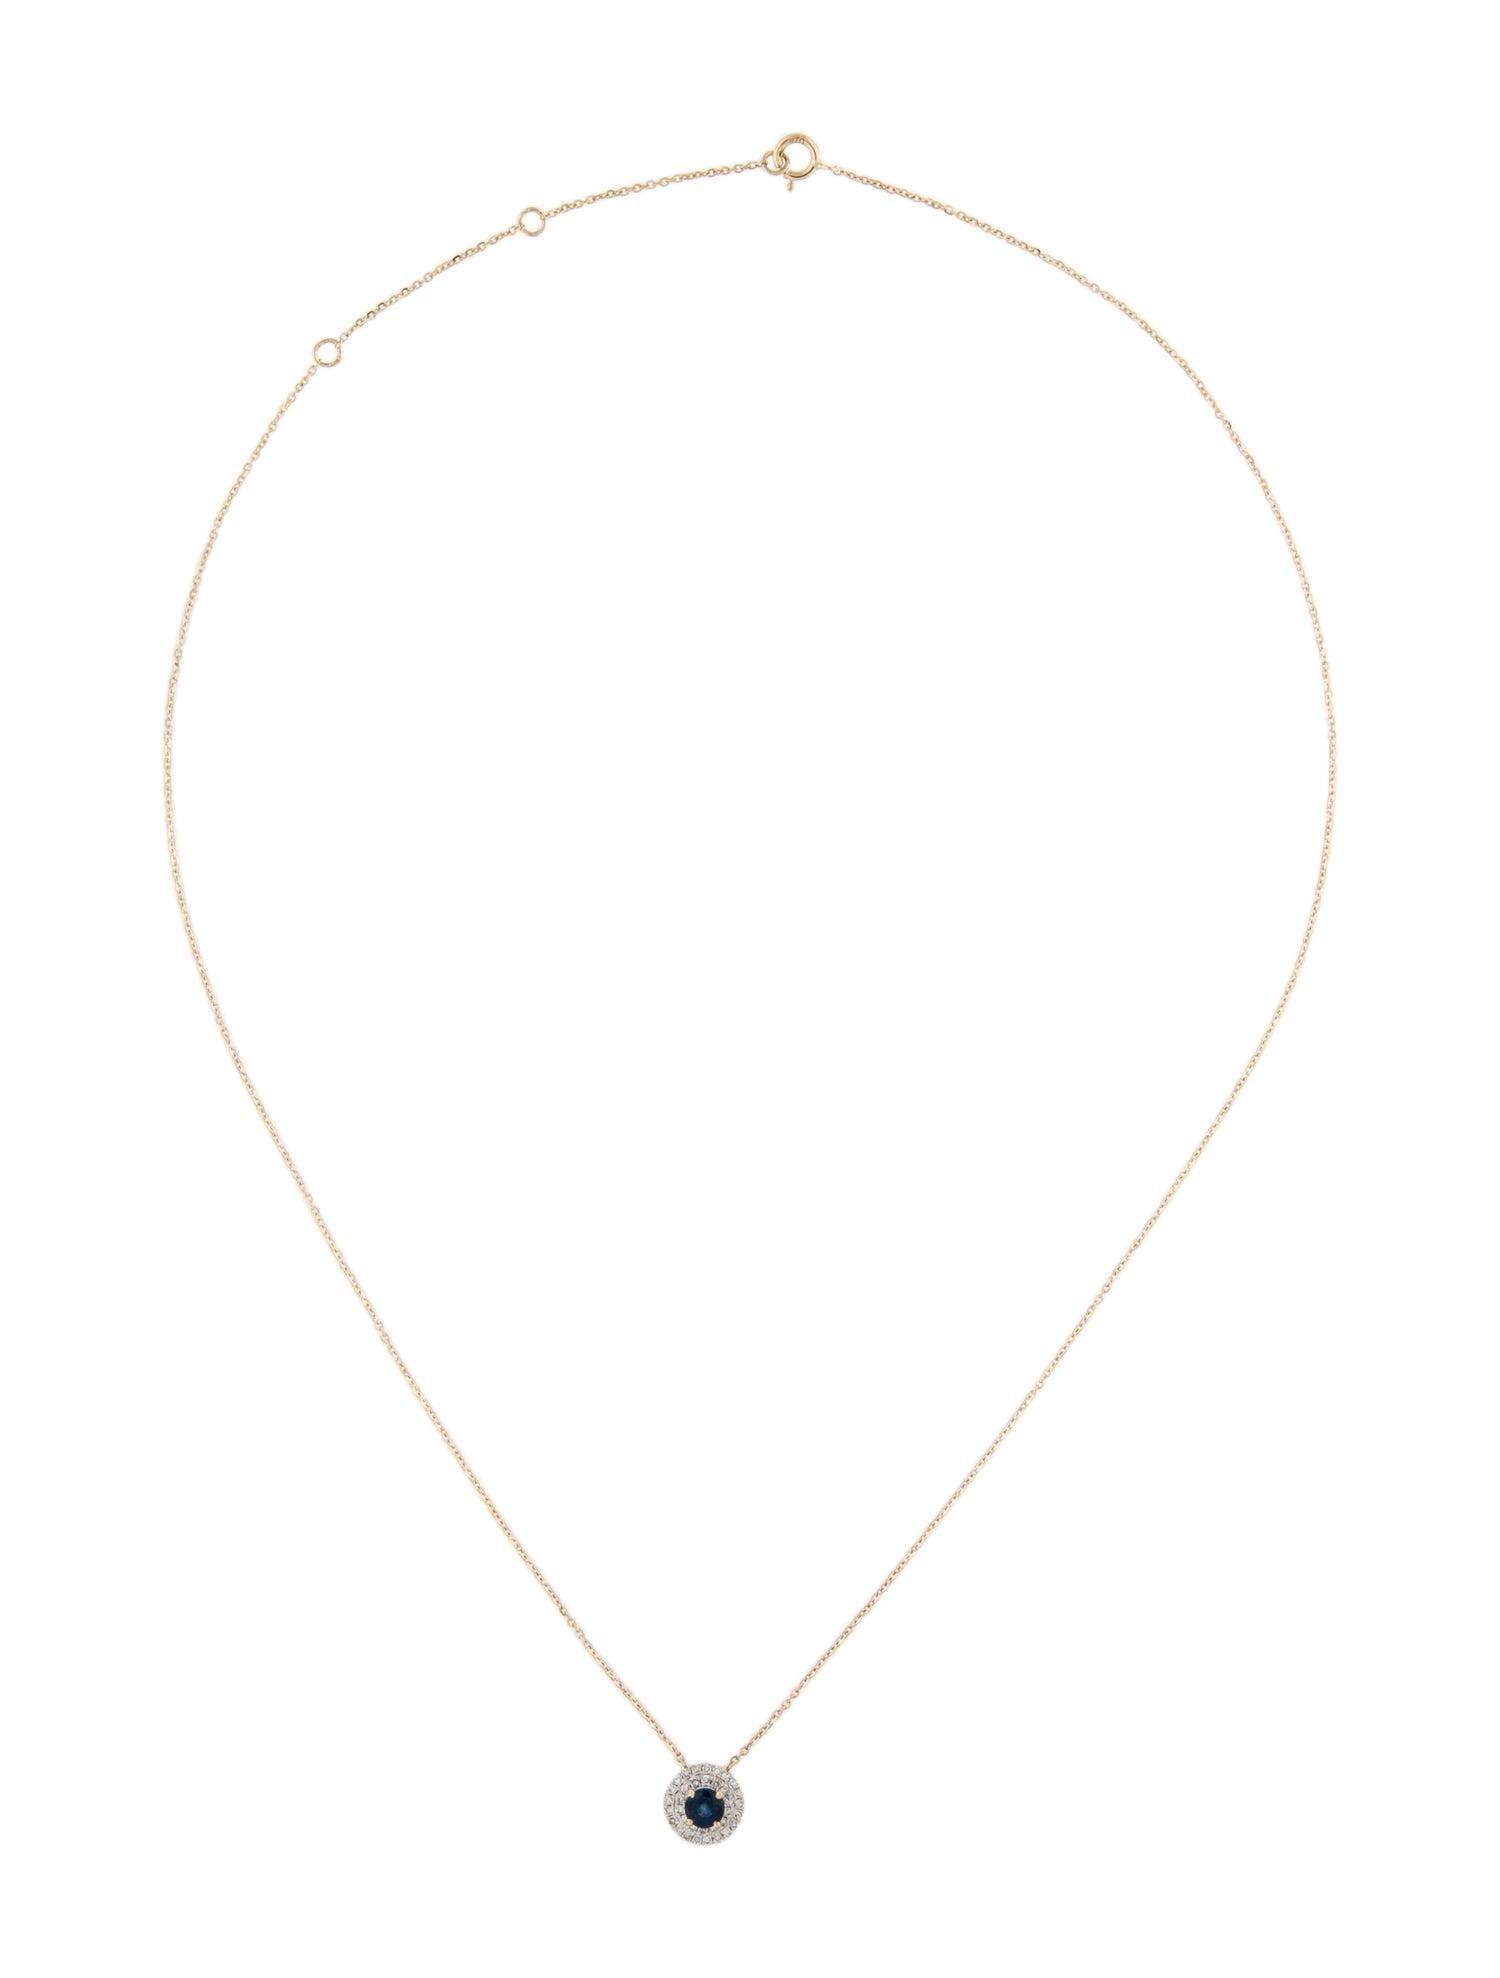 Brilliant Cut Stunning 14K Sapphire & Diamond Pendant Necklace: Timeless Elegance, Luxury For Sale